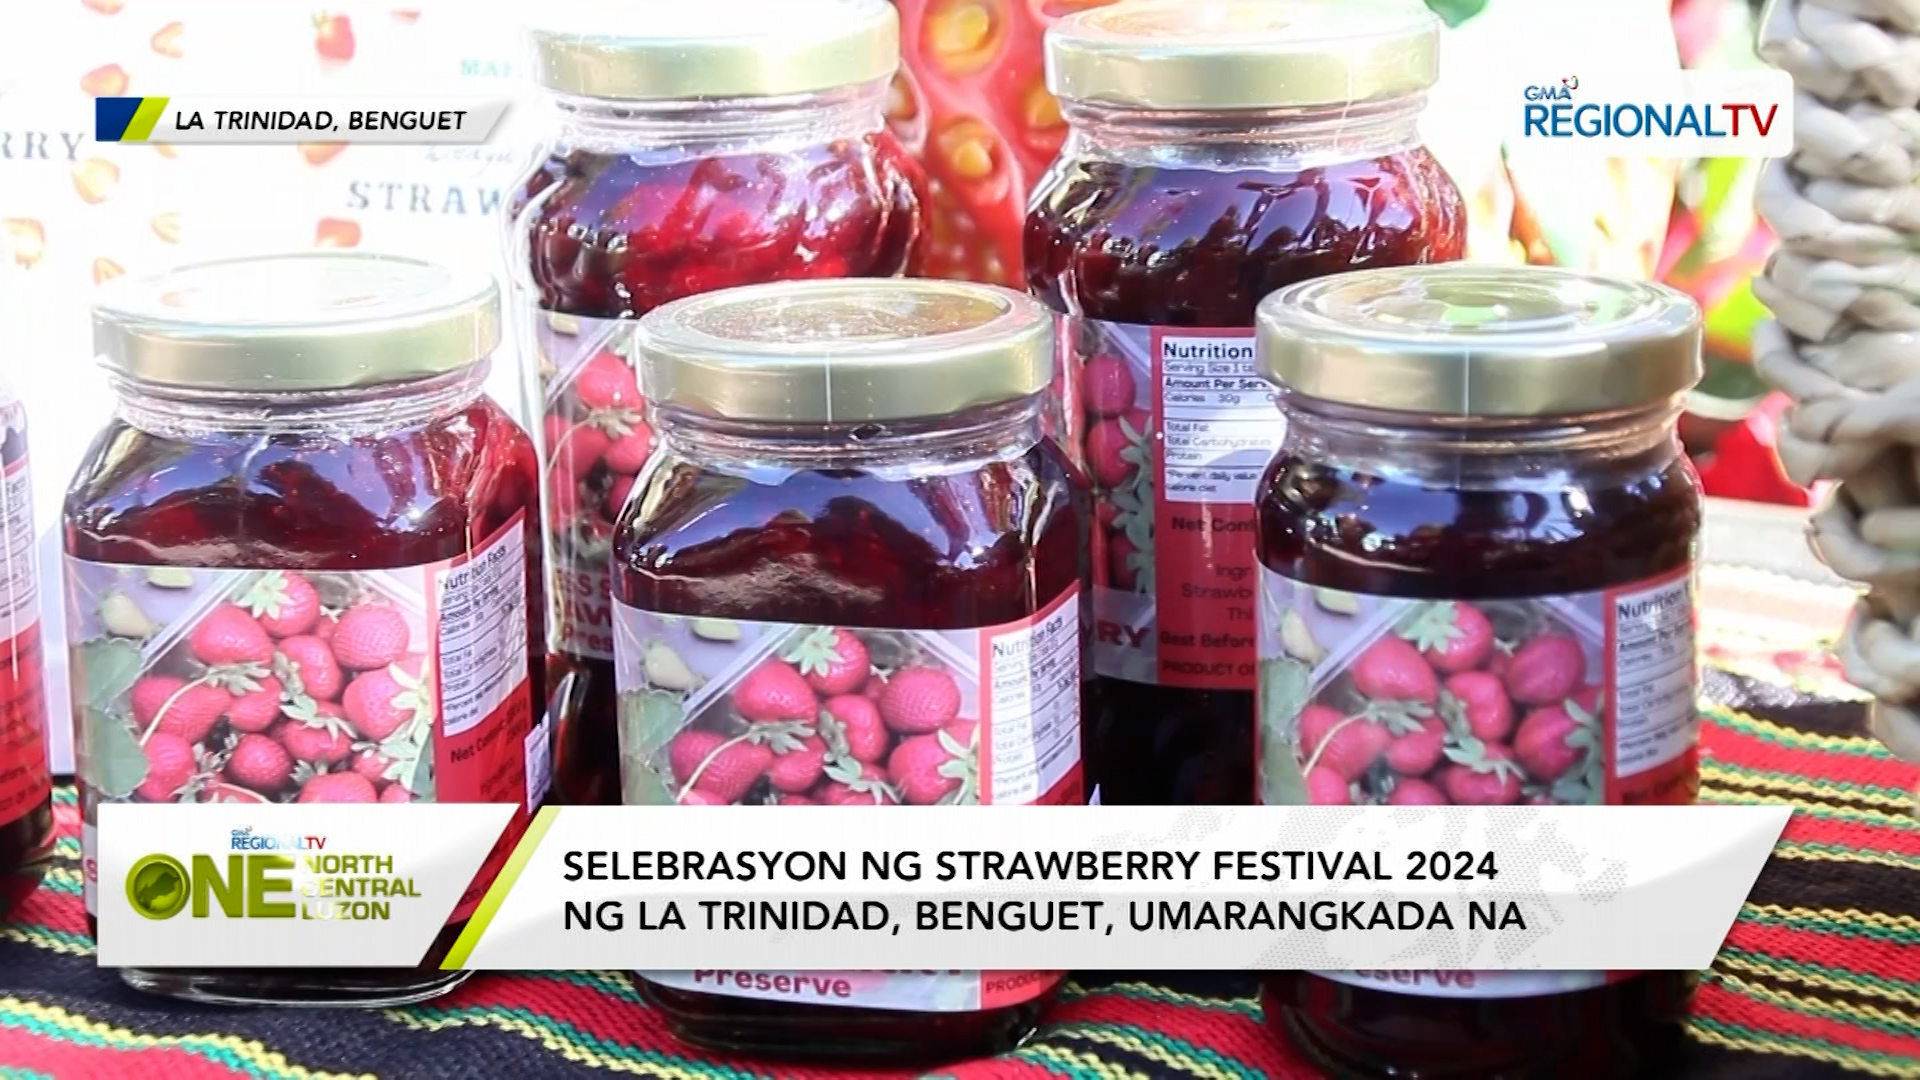 Strawberry Festival 2024 ng La Trinidad, Benguet, umarangkada na